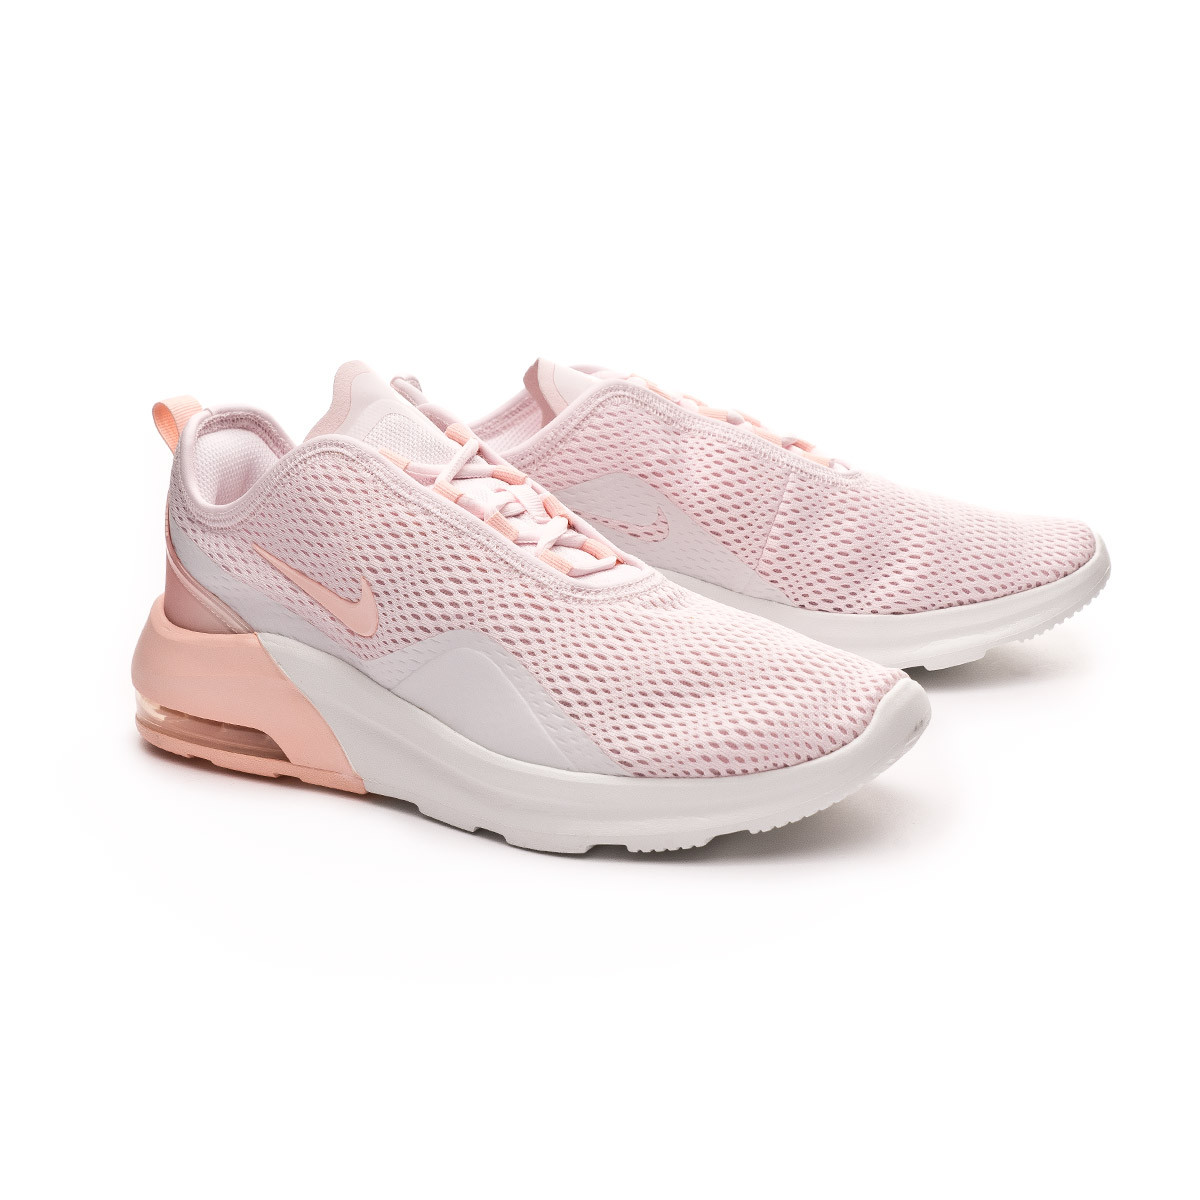 Zapatilla Nike Air Max Motion 2 Pale pink-Washed coral-Pale ivory - Tienda  de fútbol Fútbol Emotion